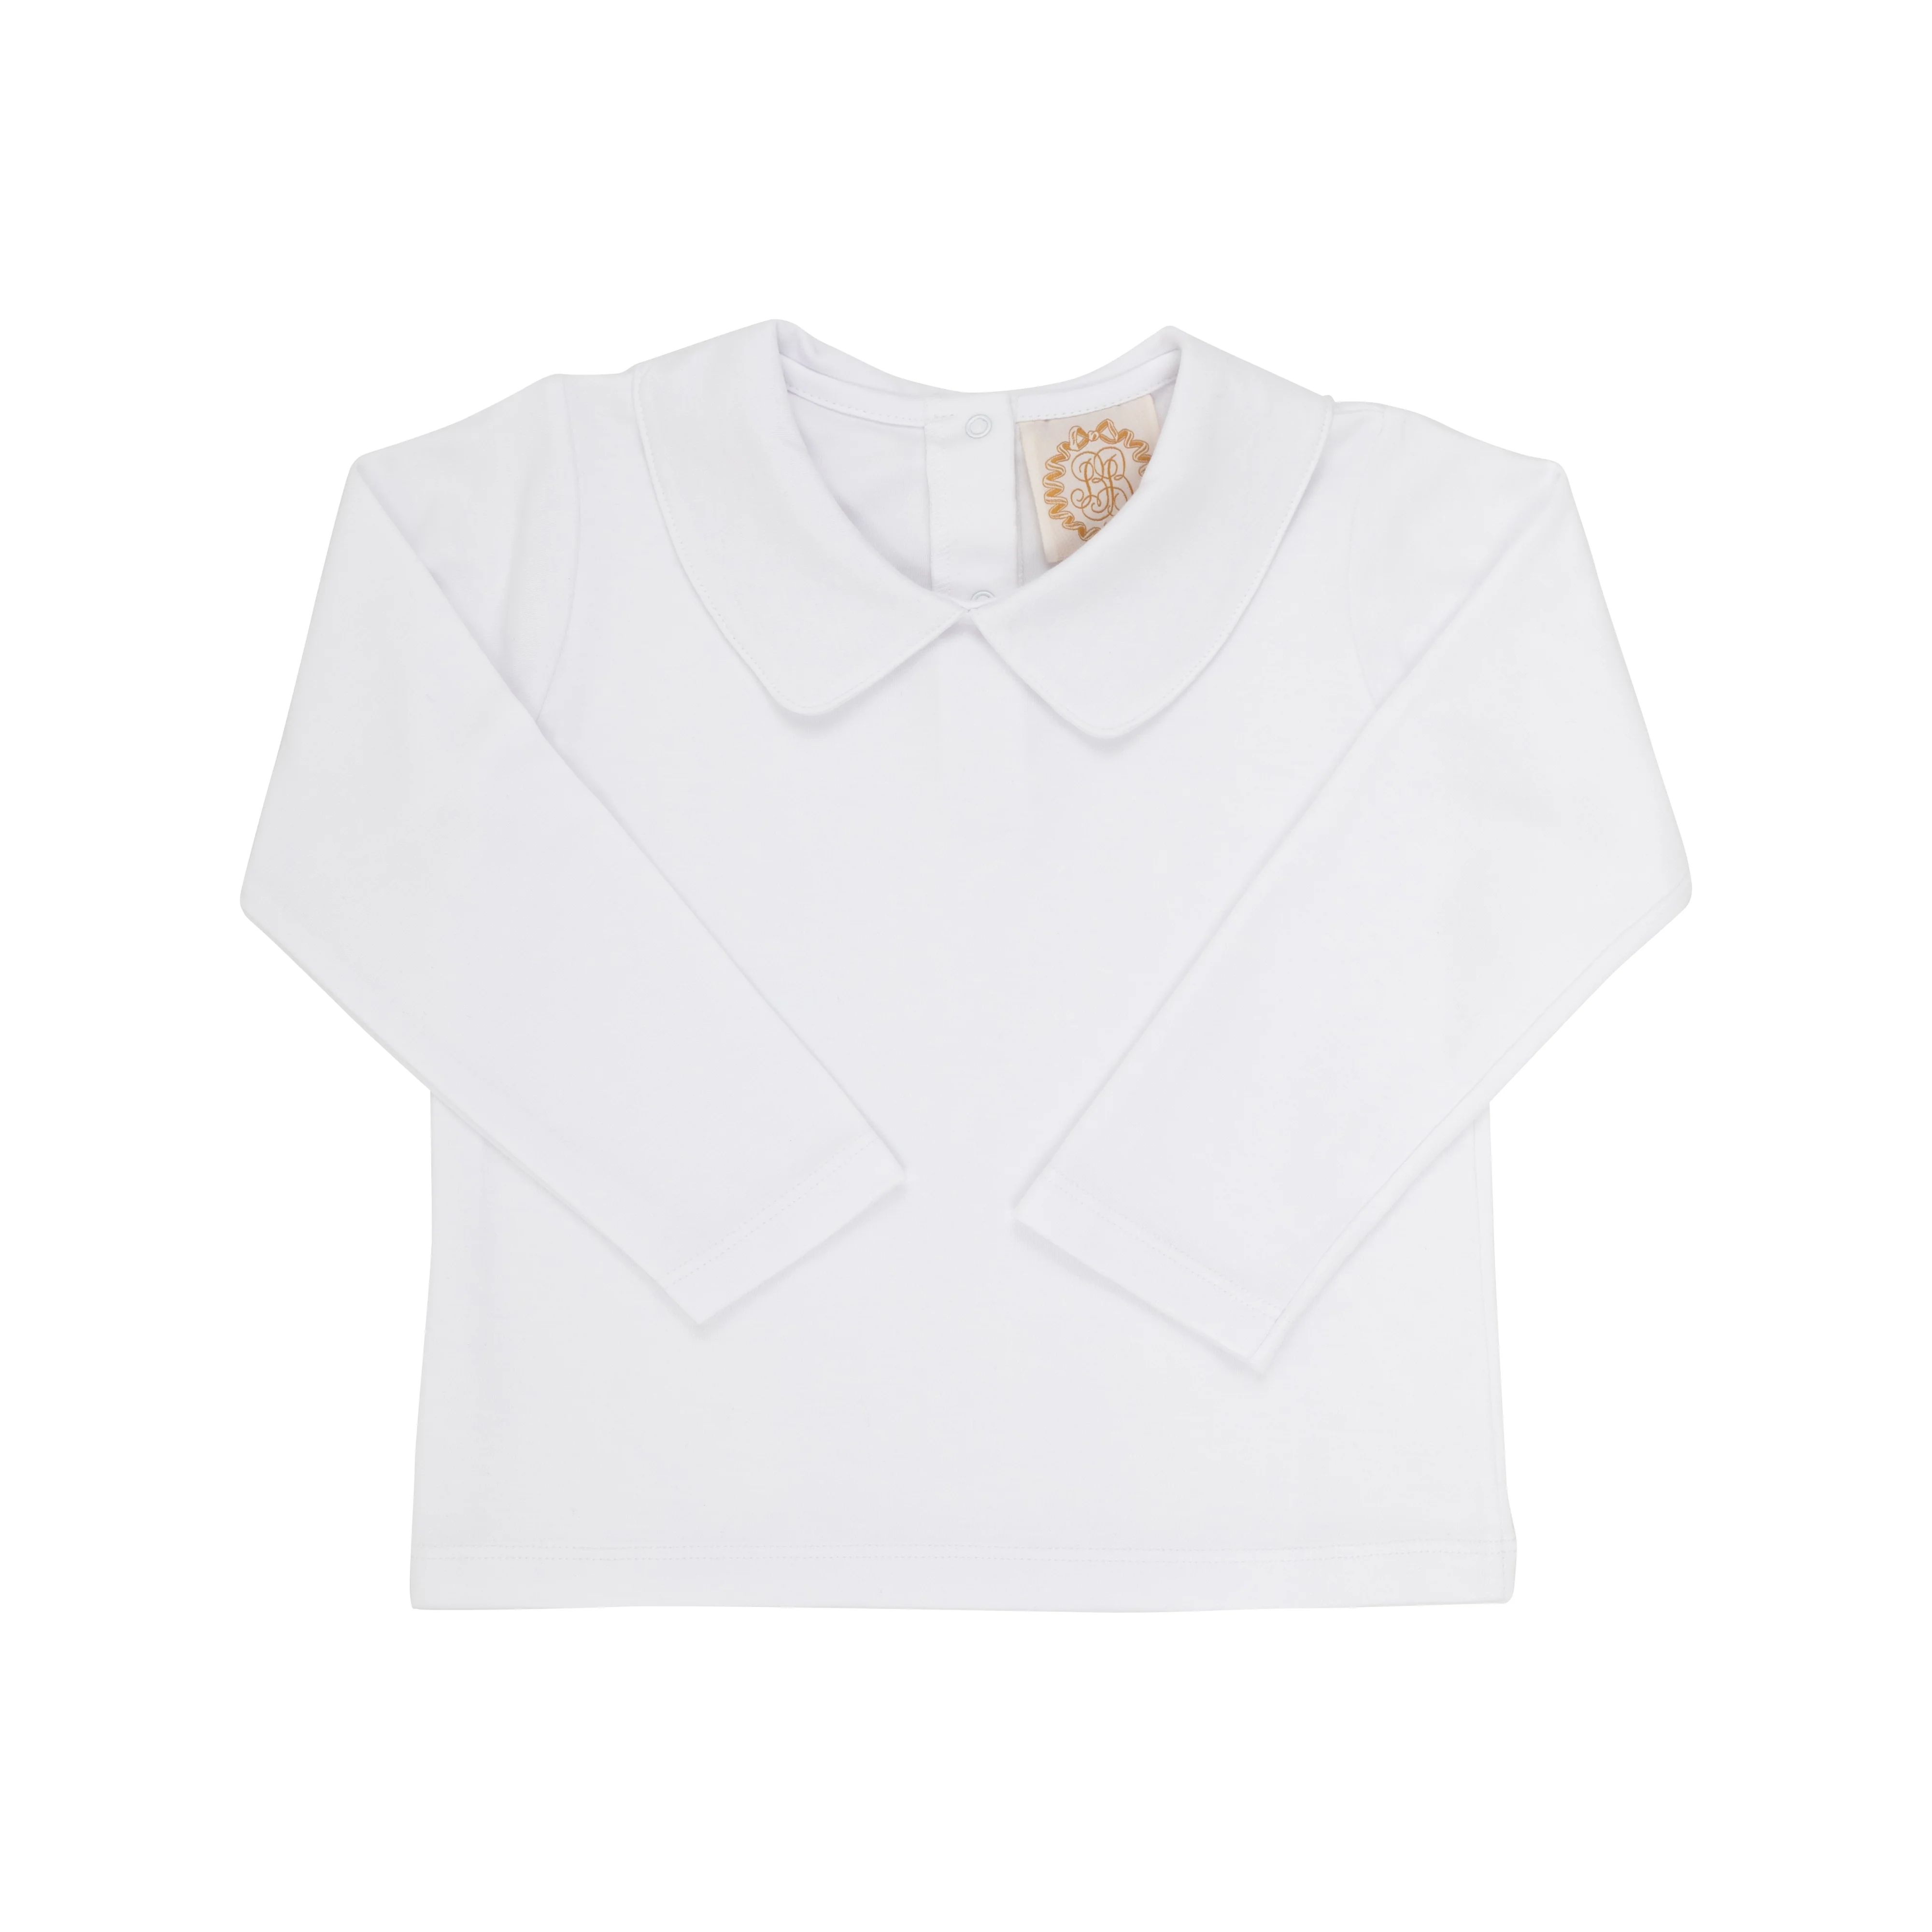 Peter Pan Collar Shirt & Onesie (Long Sleeve Pima) - Worth Avenue White | The Beaufort Bonnet Company